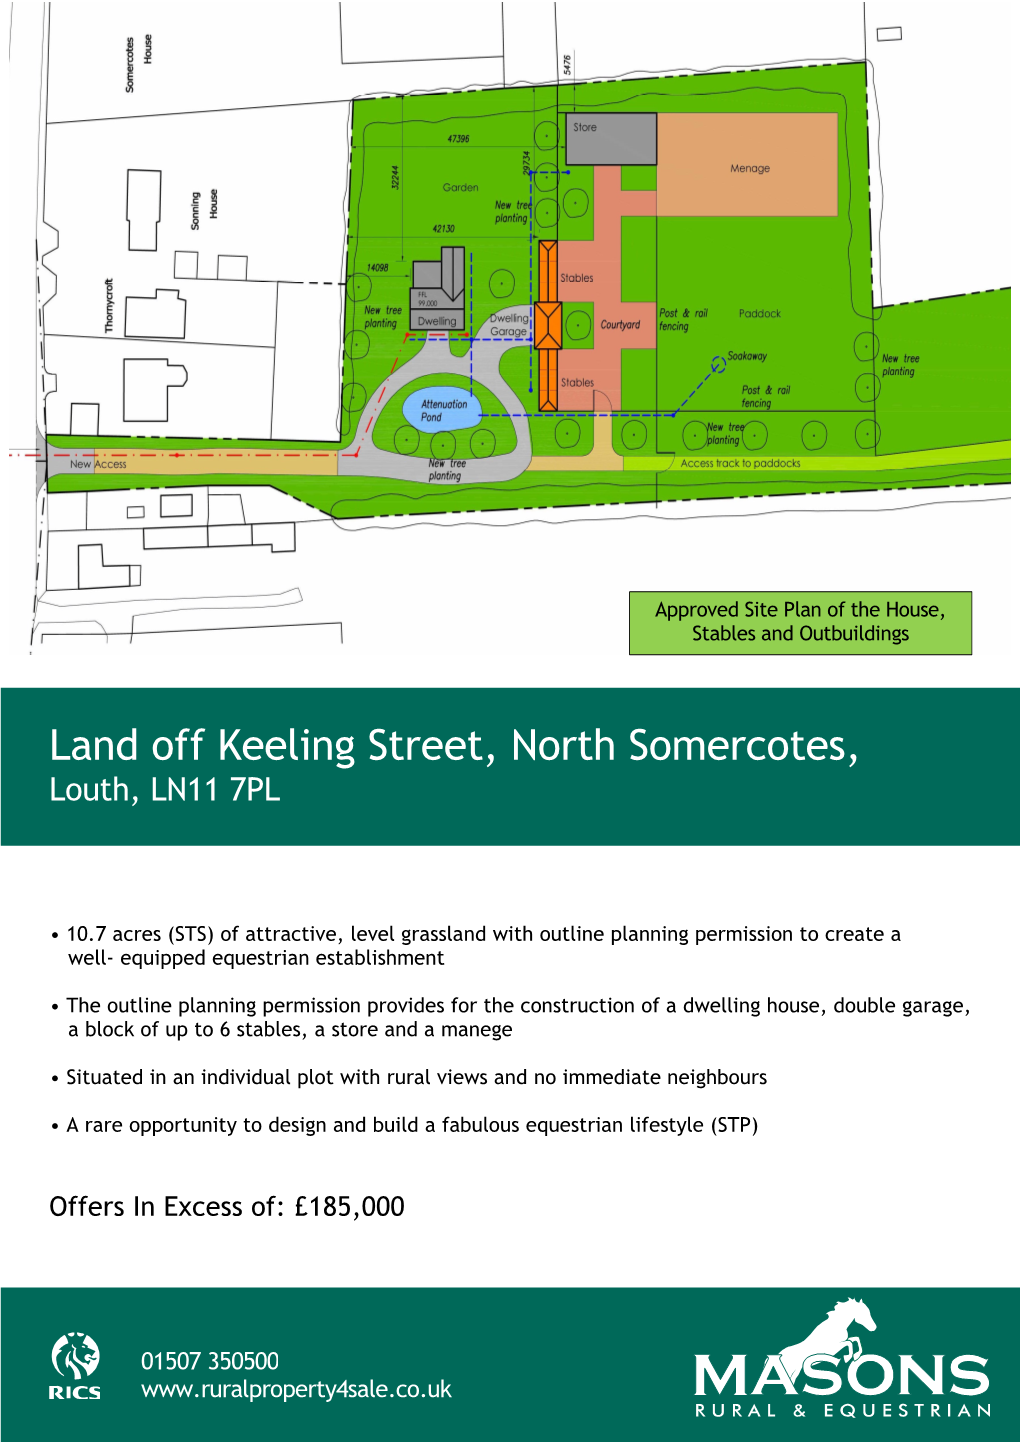 Land Off Keeling Street, North Somercotes, Louth, LN11 7PL